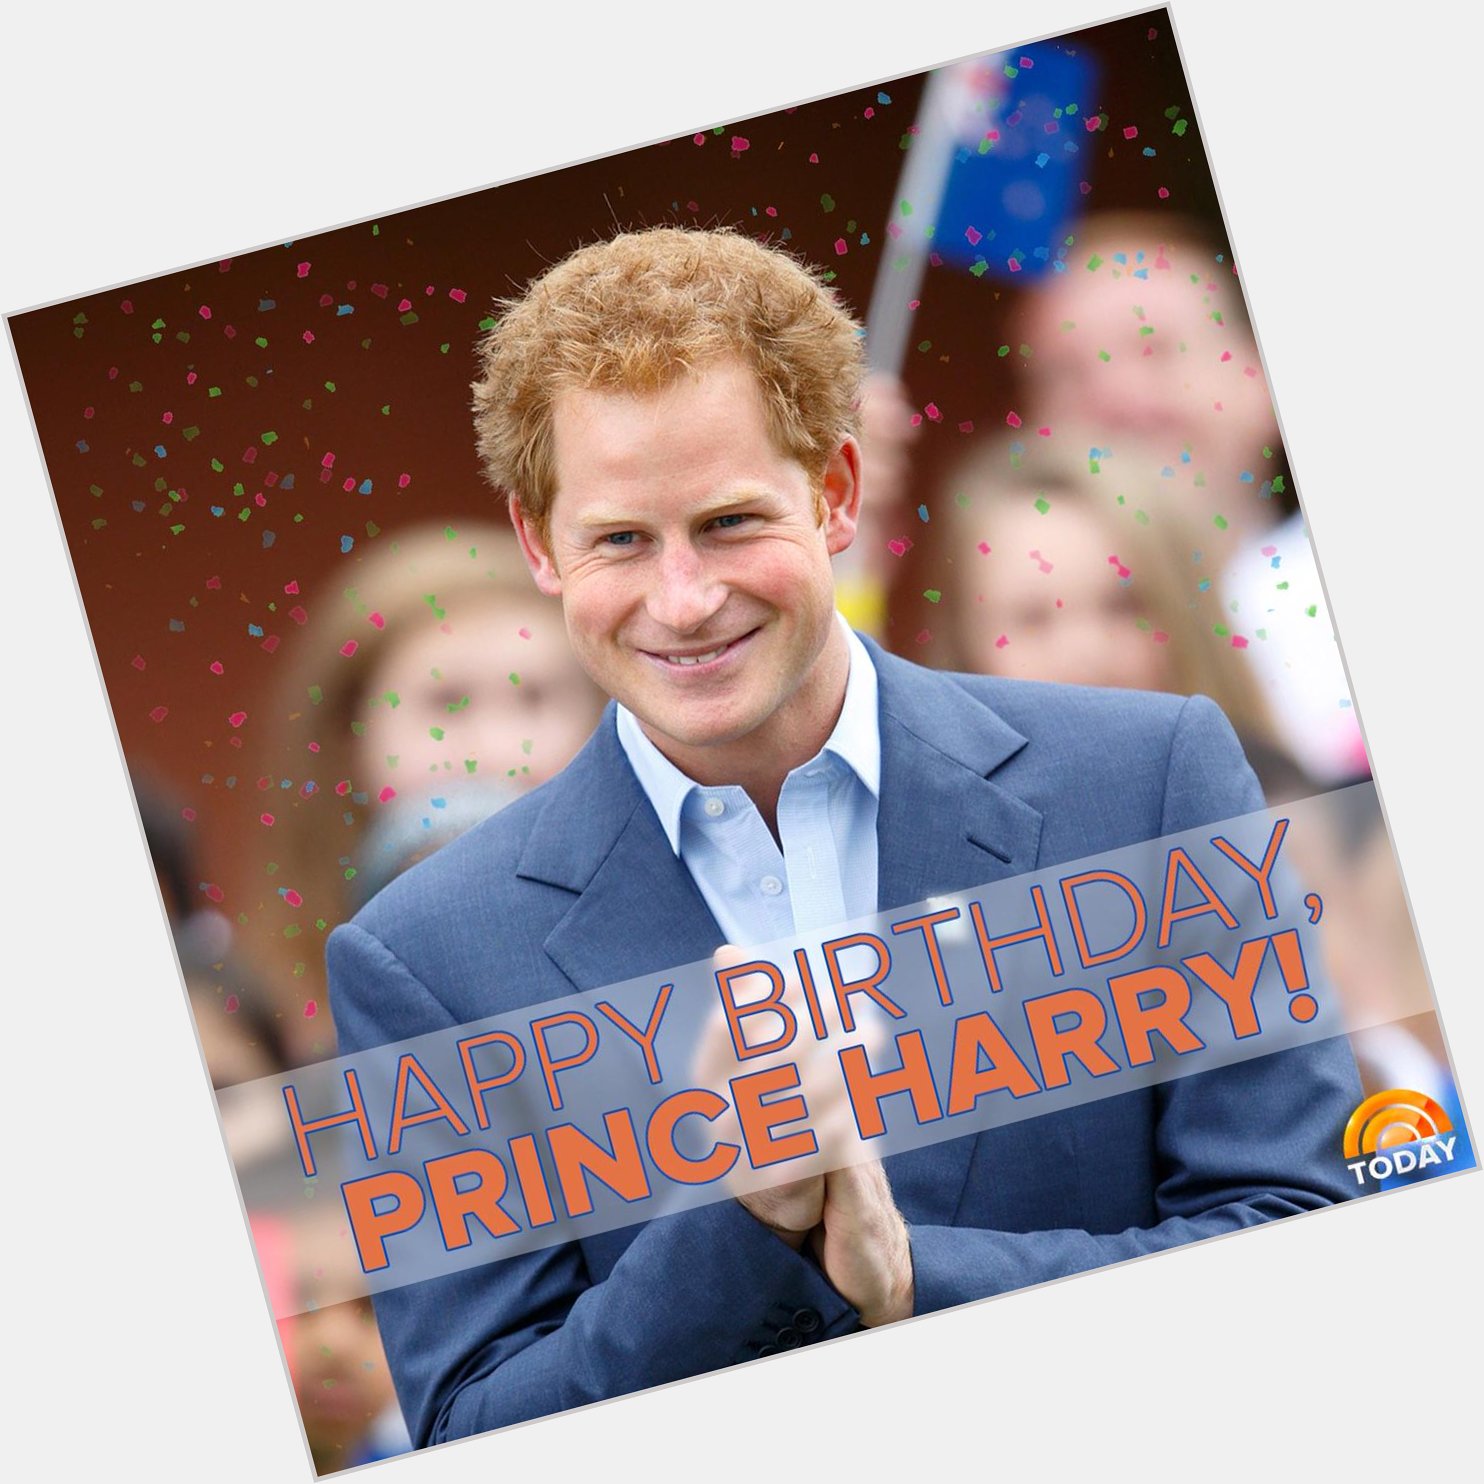 TODAYshow: Happy Birthday, Prince Harry!  